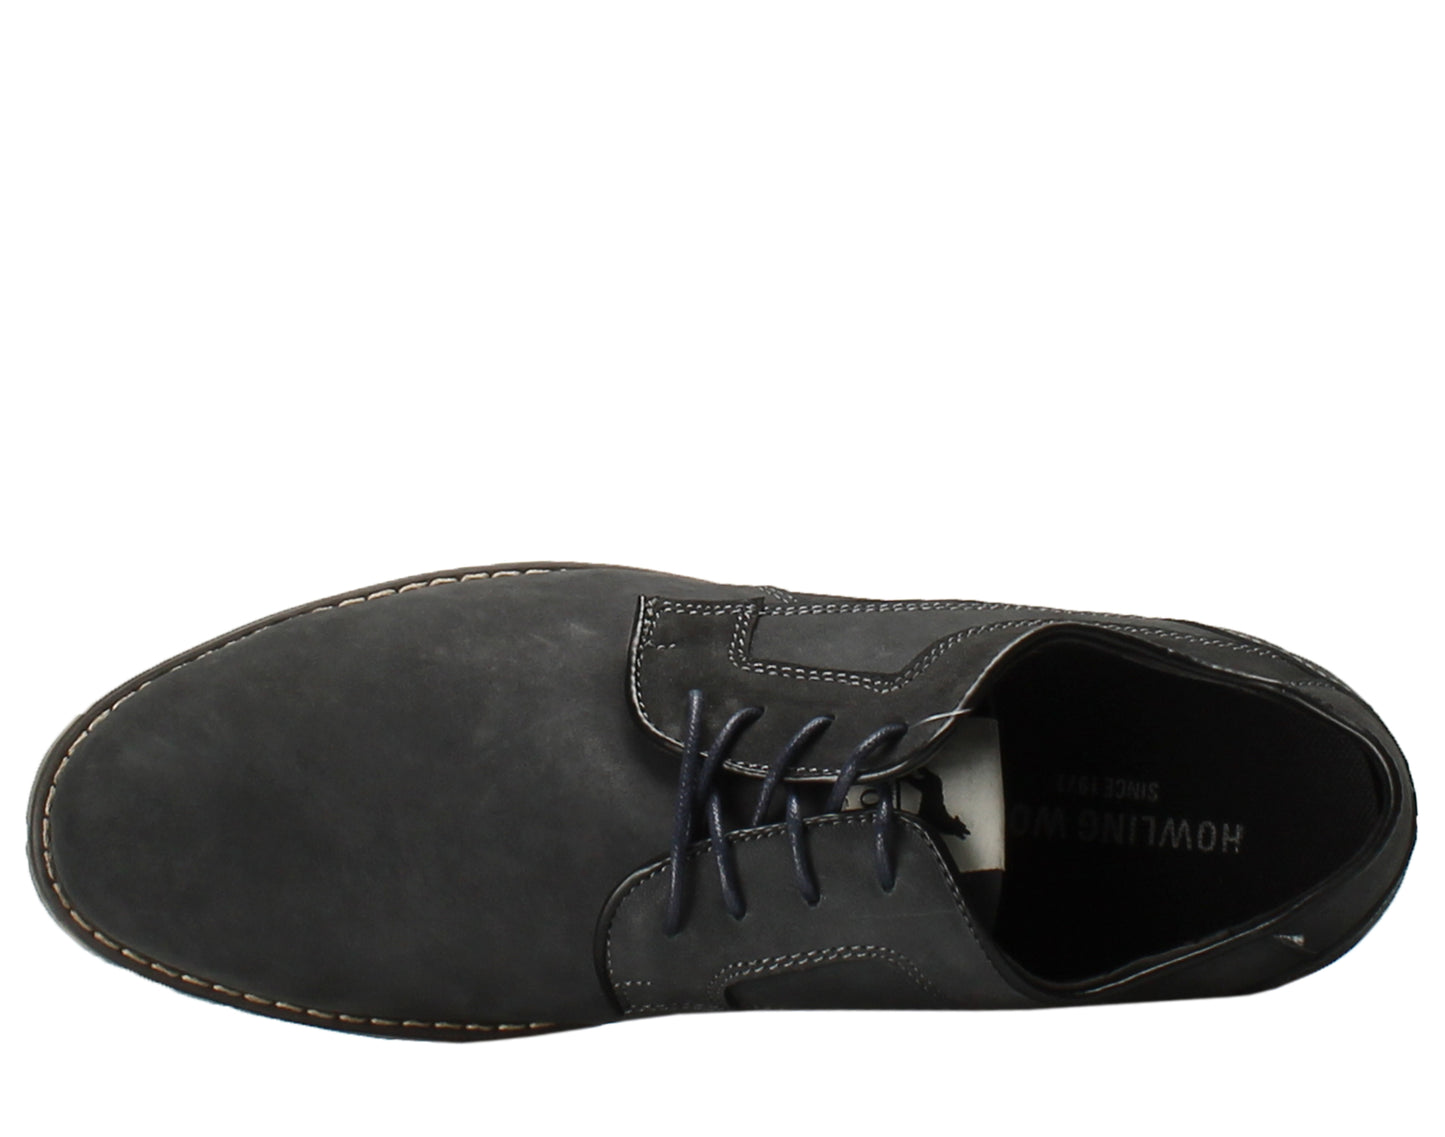 Howling Wolf Carma Plain Toe Oxford Grey Men's Shoes CARMA-006